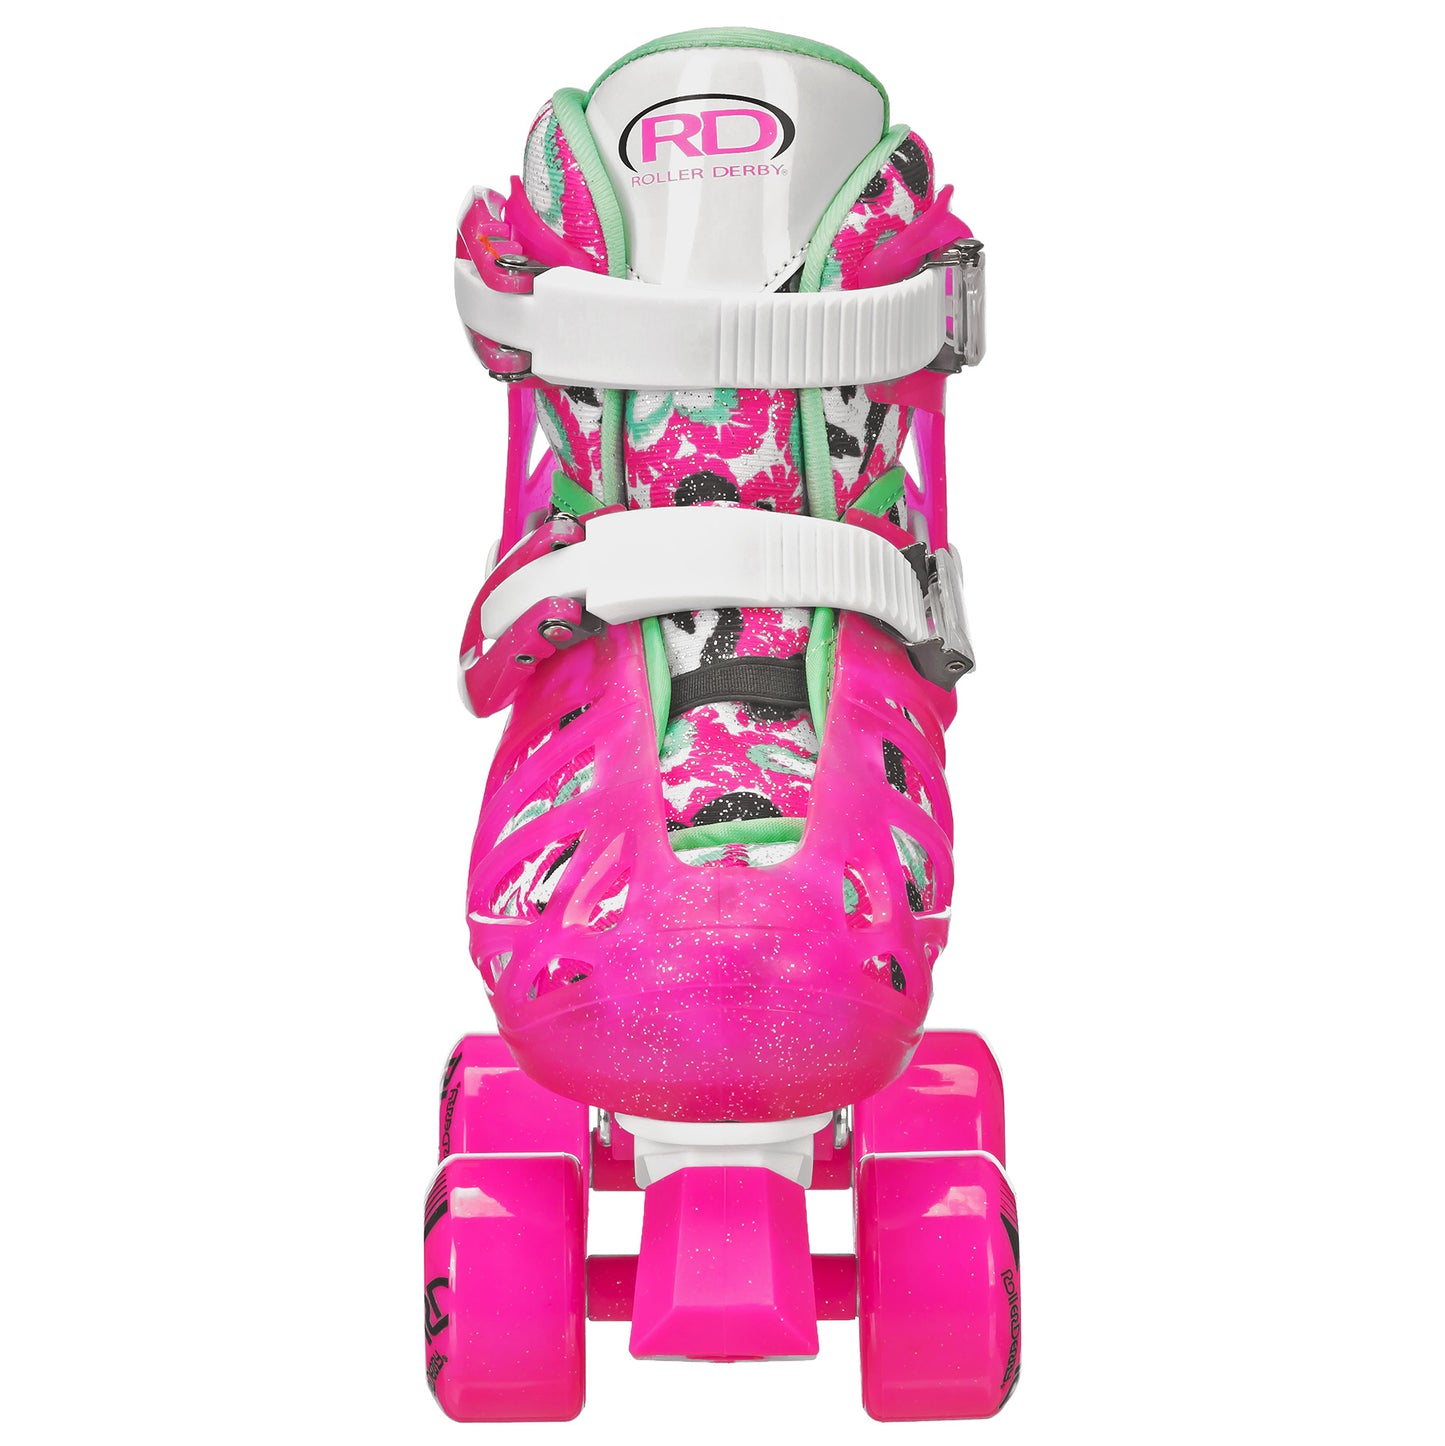 Trac Star Youth Girl's Adjustable Roller Skates